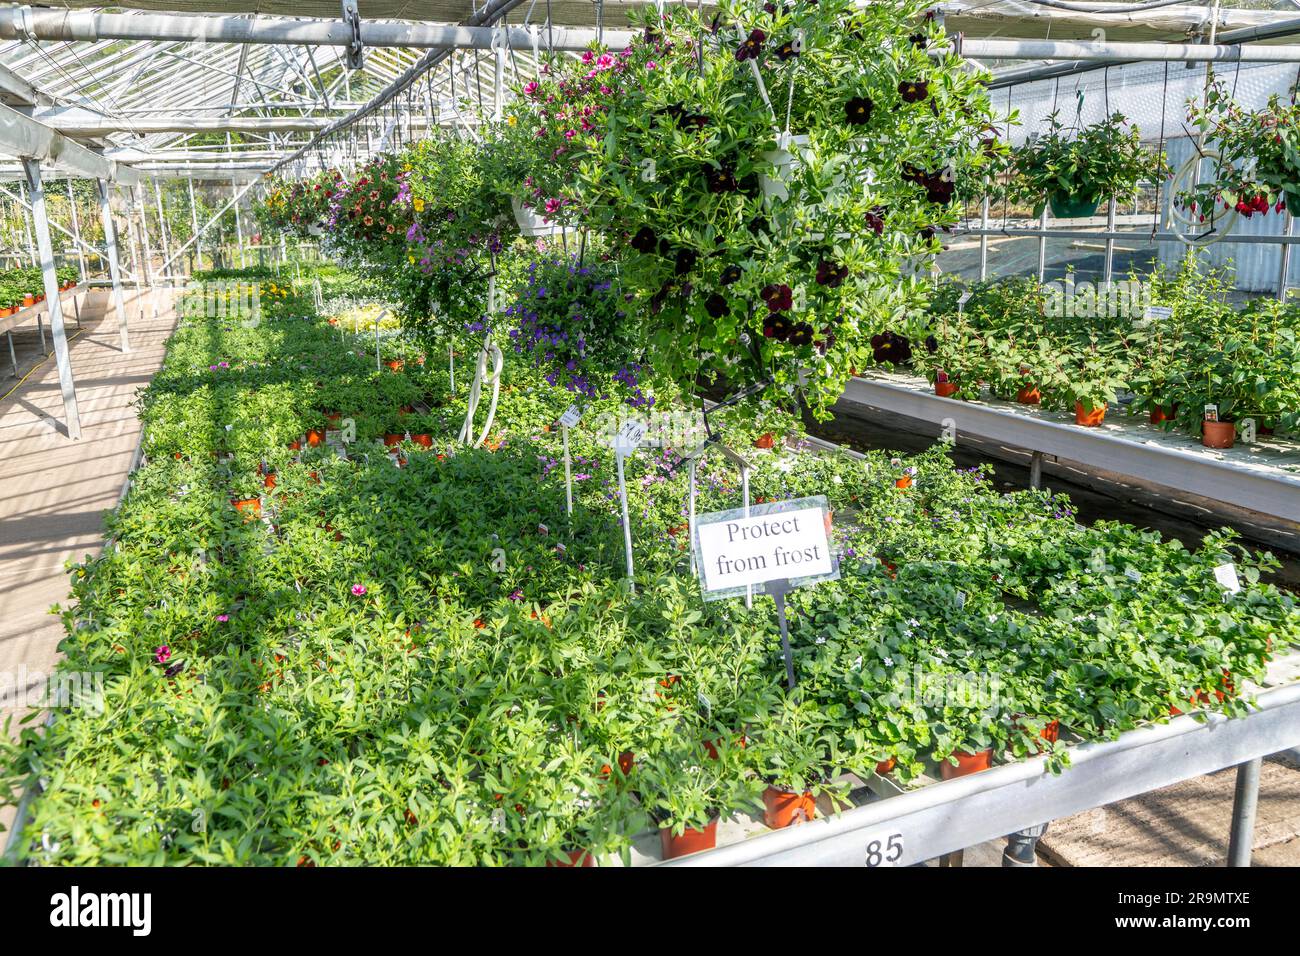 Plantas fucsia en maceta en exhibición dentro de invernadero de vivero de plantas, mariquita viveros, Snape, Suffolk, Inglaterra, REINO UNIDO Foto de stock